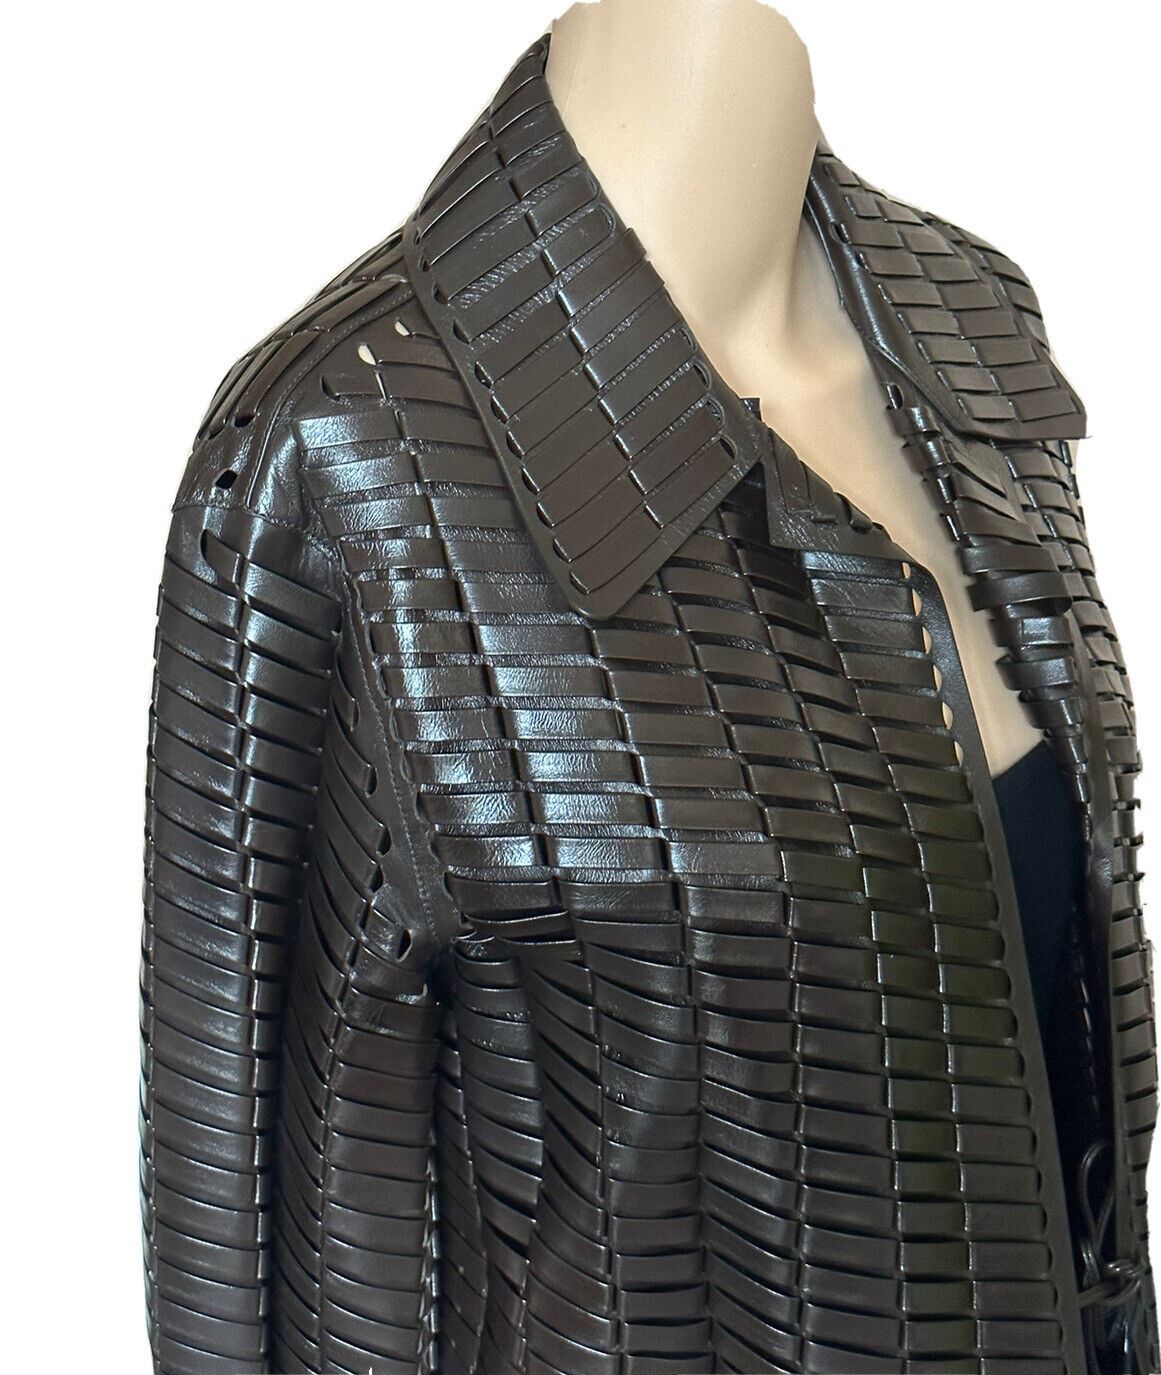 NWT $14900 Bottega Veneta Women's Woven Shiny Leather Coat Chocolate 36R 618482